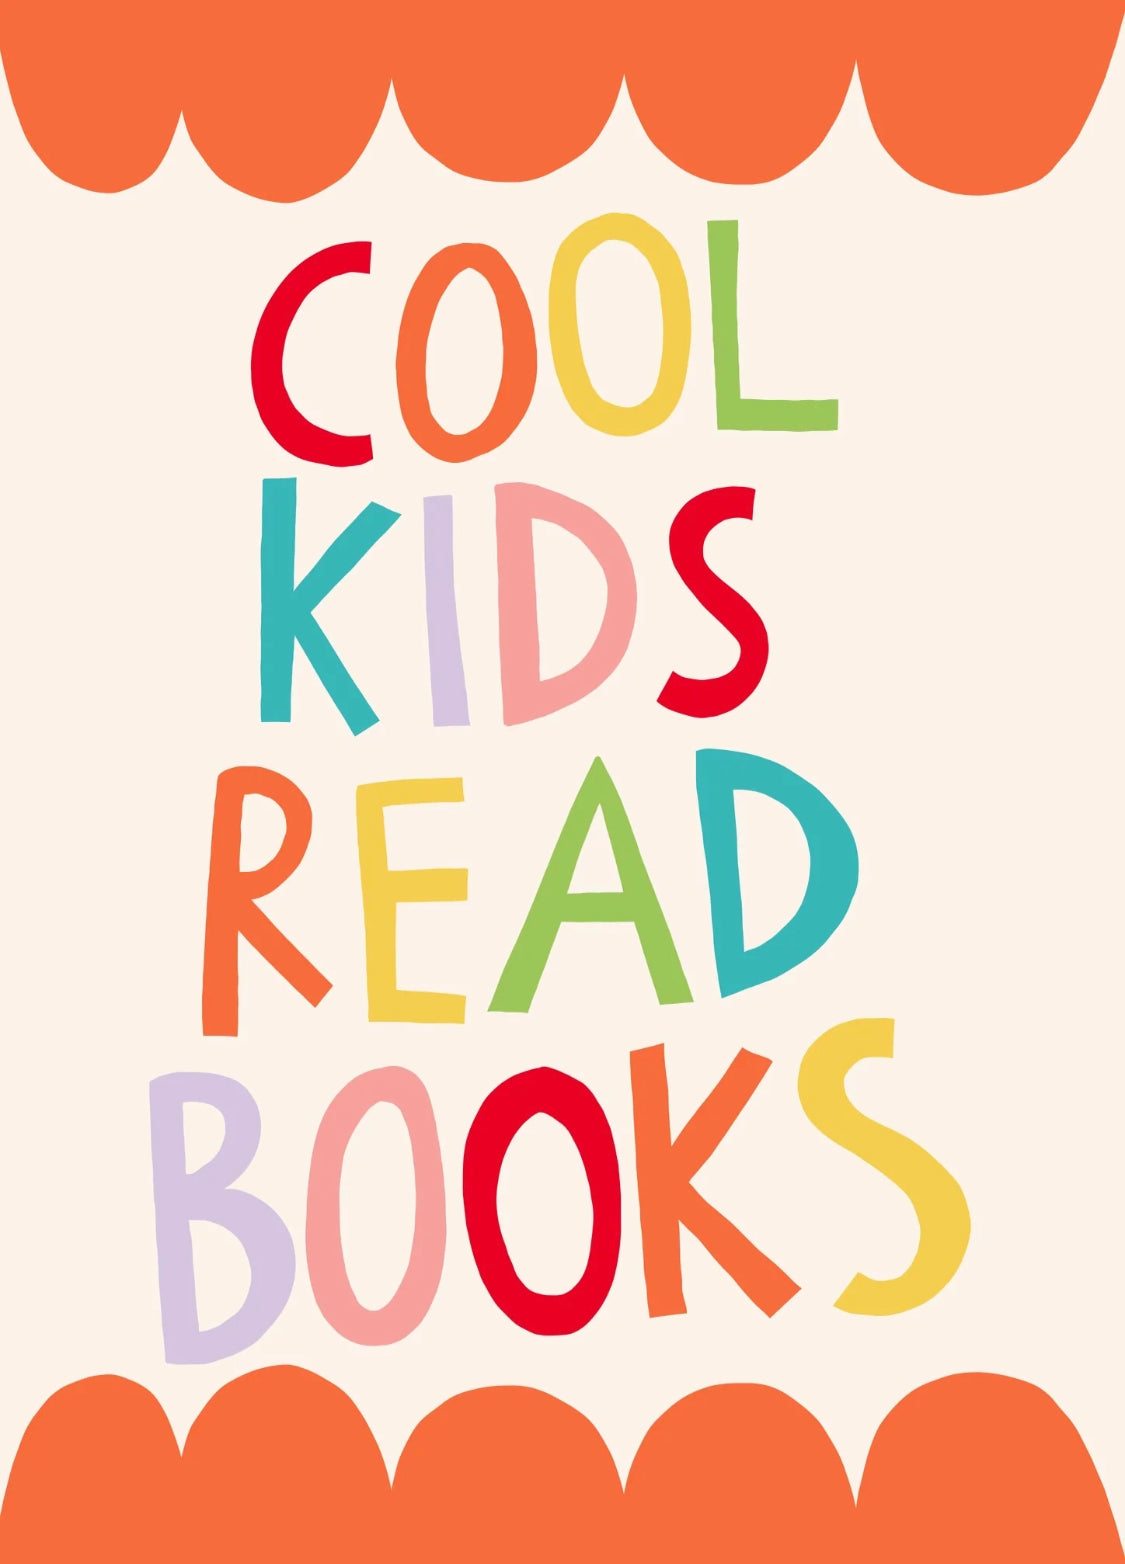 Cool Kids Read Books A4 Print